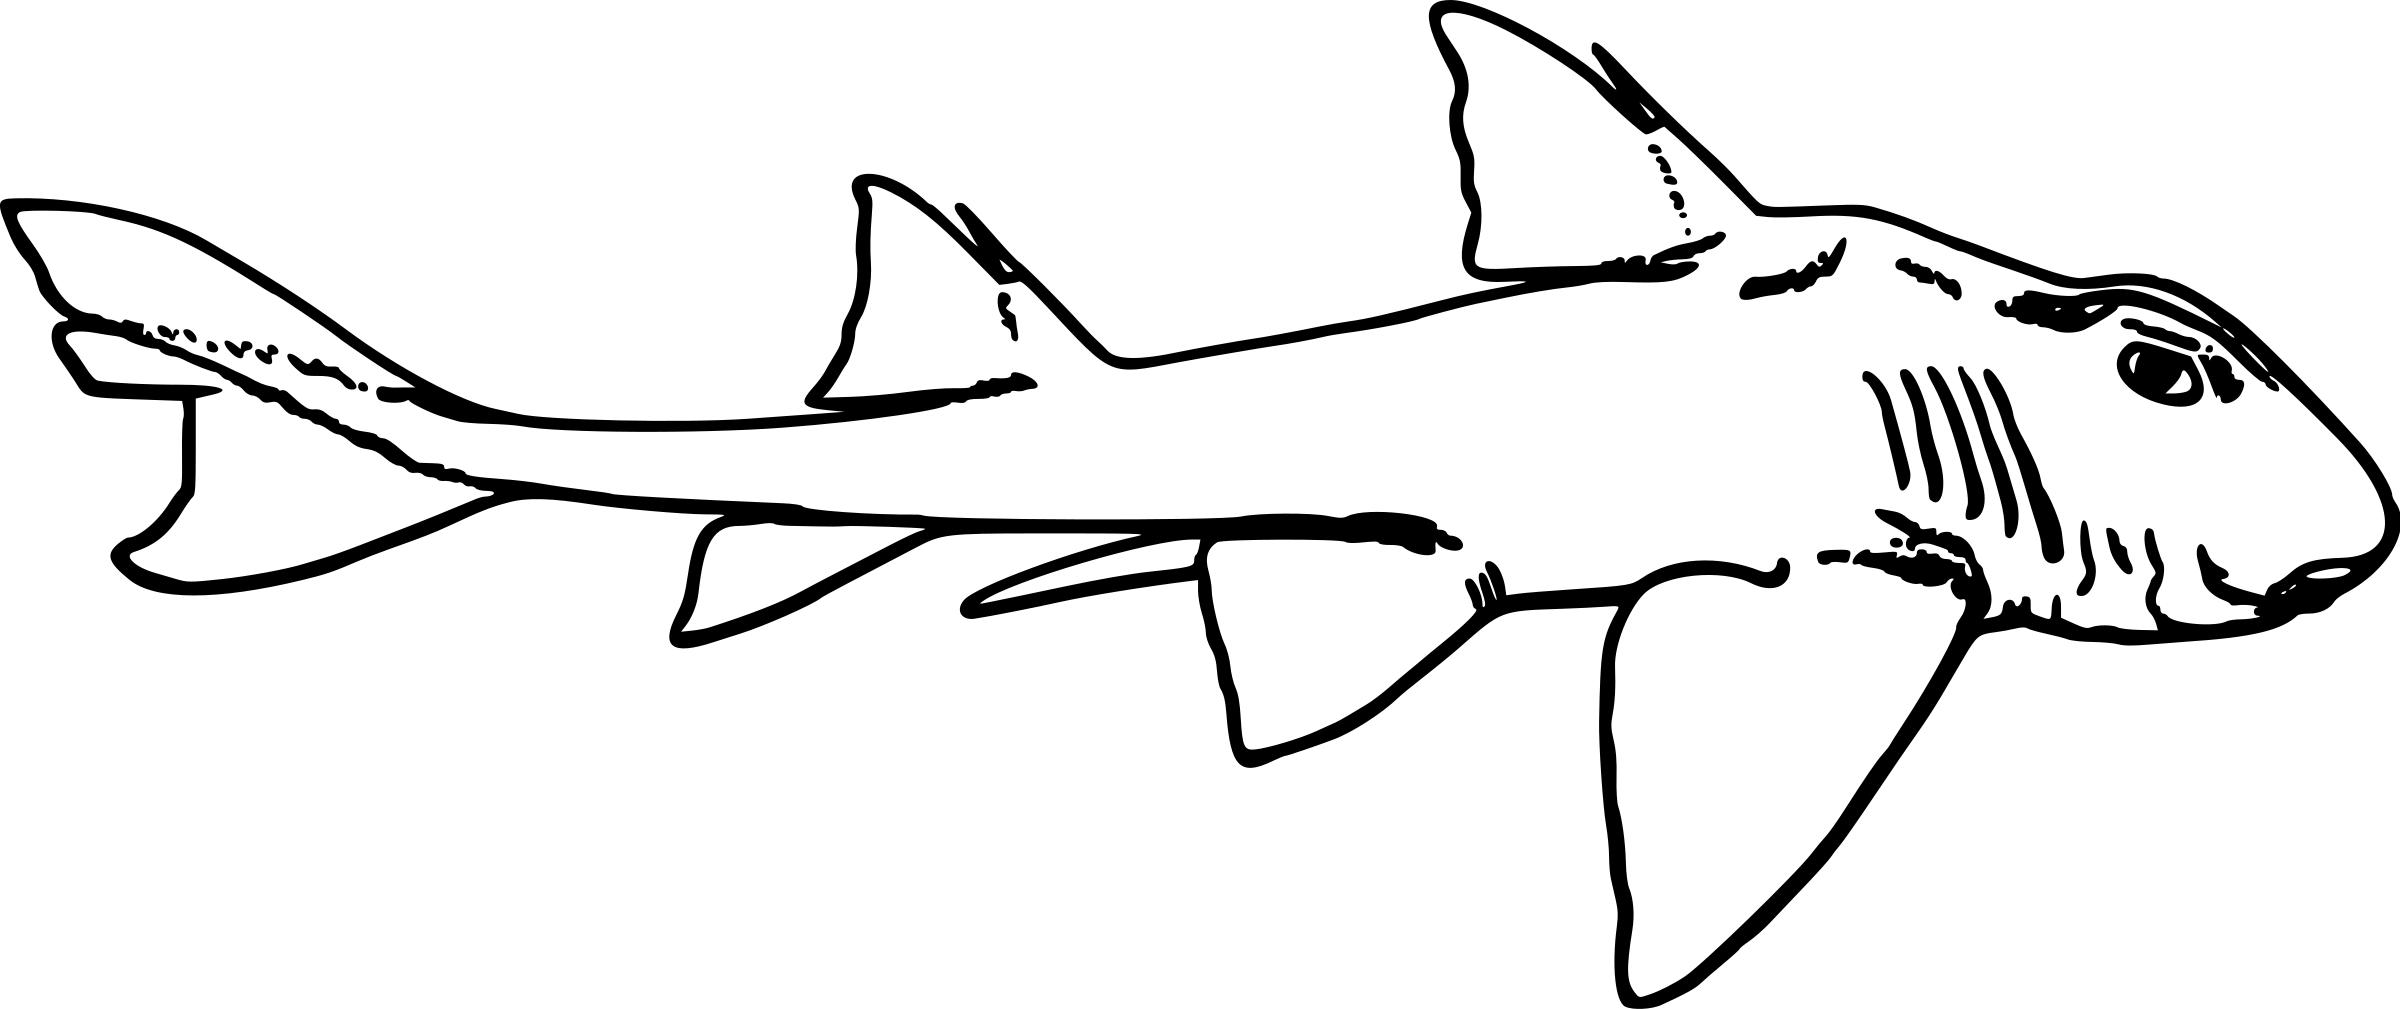 Port jackson shark png